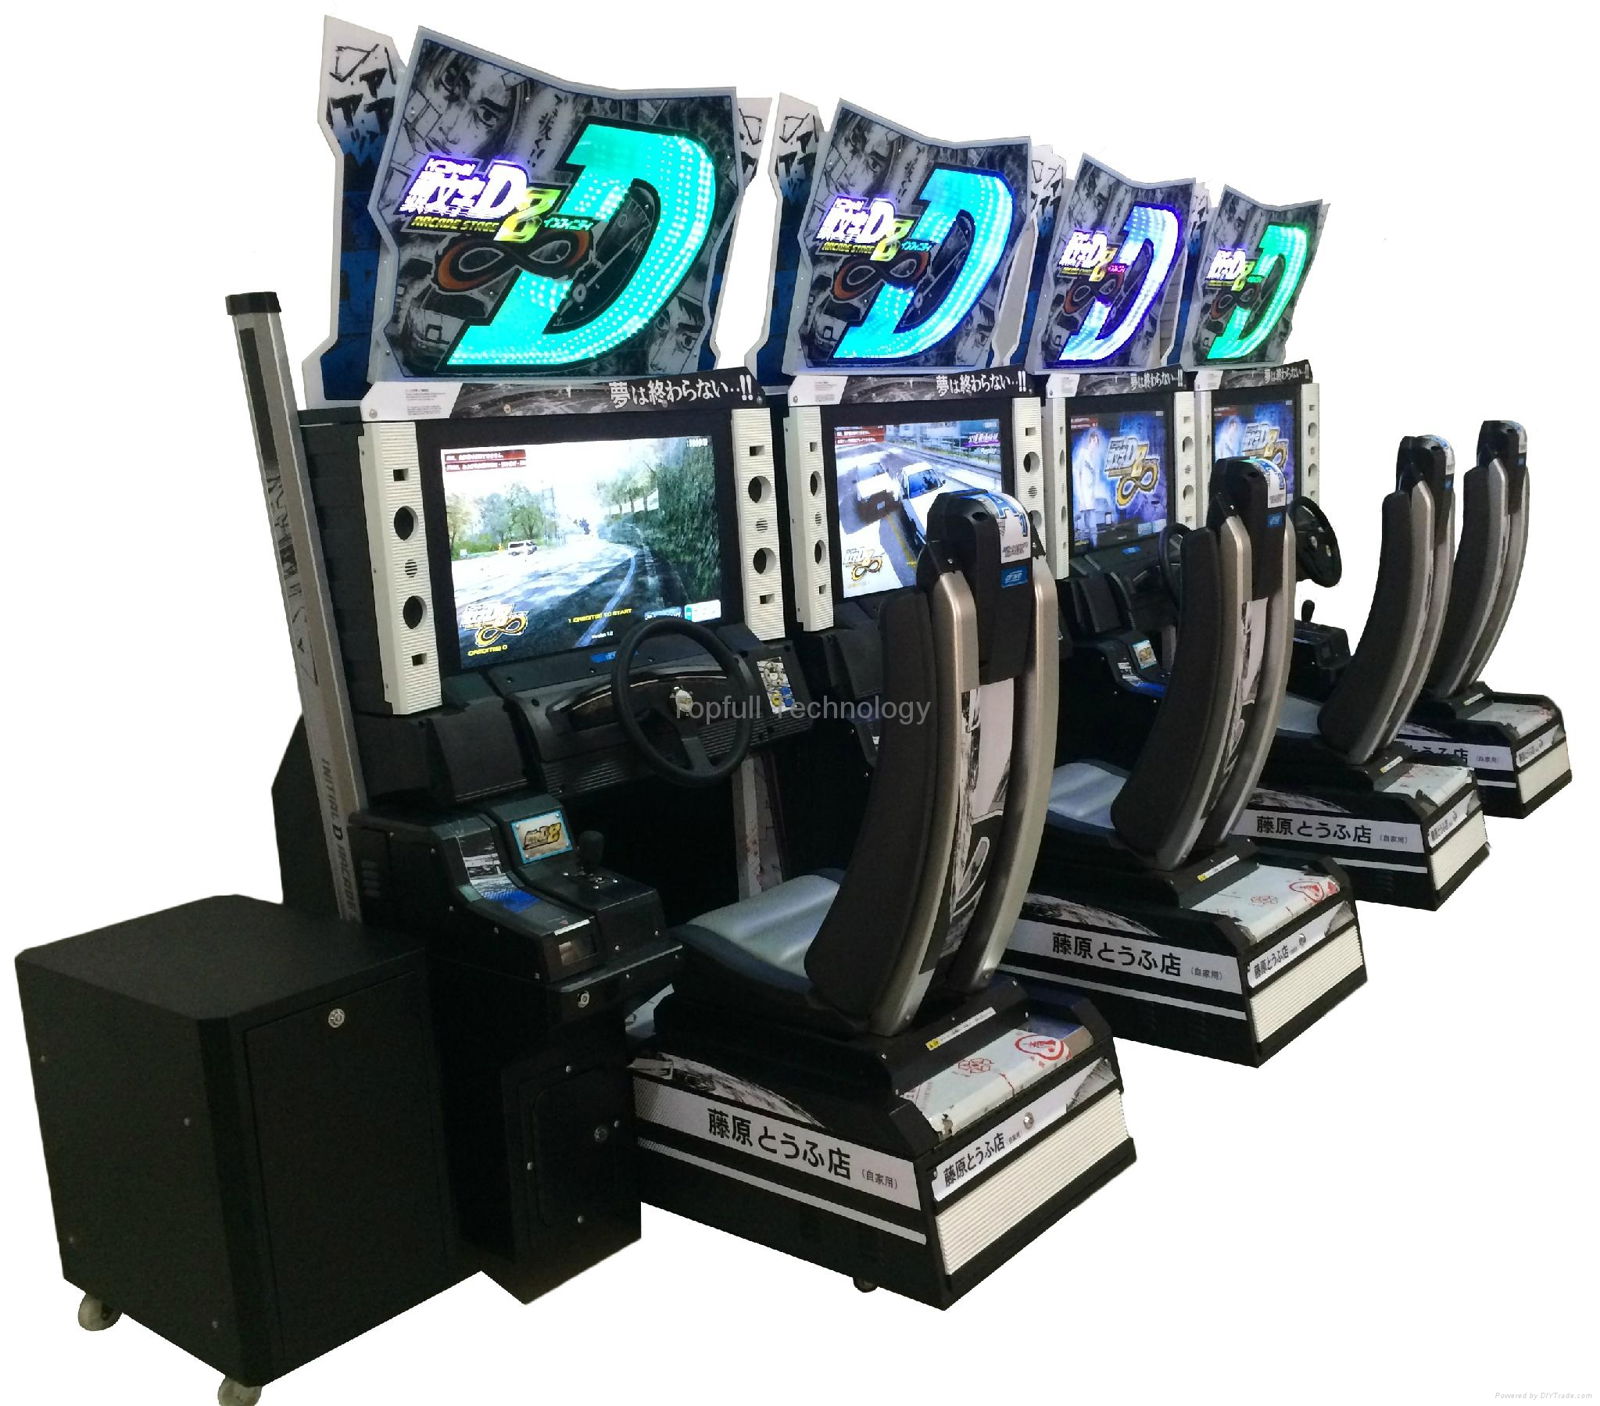  Initial D 8 Electronic Car Racing Game Machine Amusement Equipment Dedicated Ma